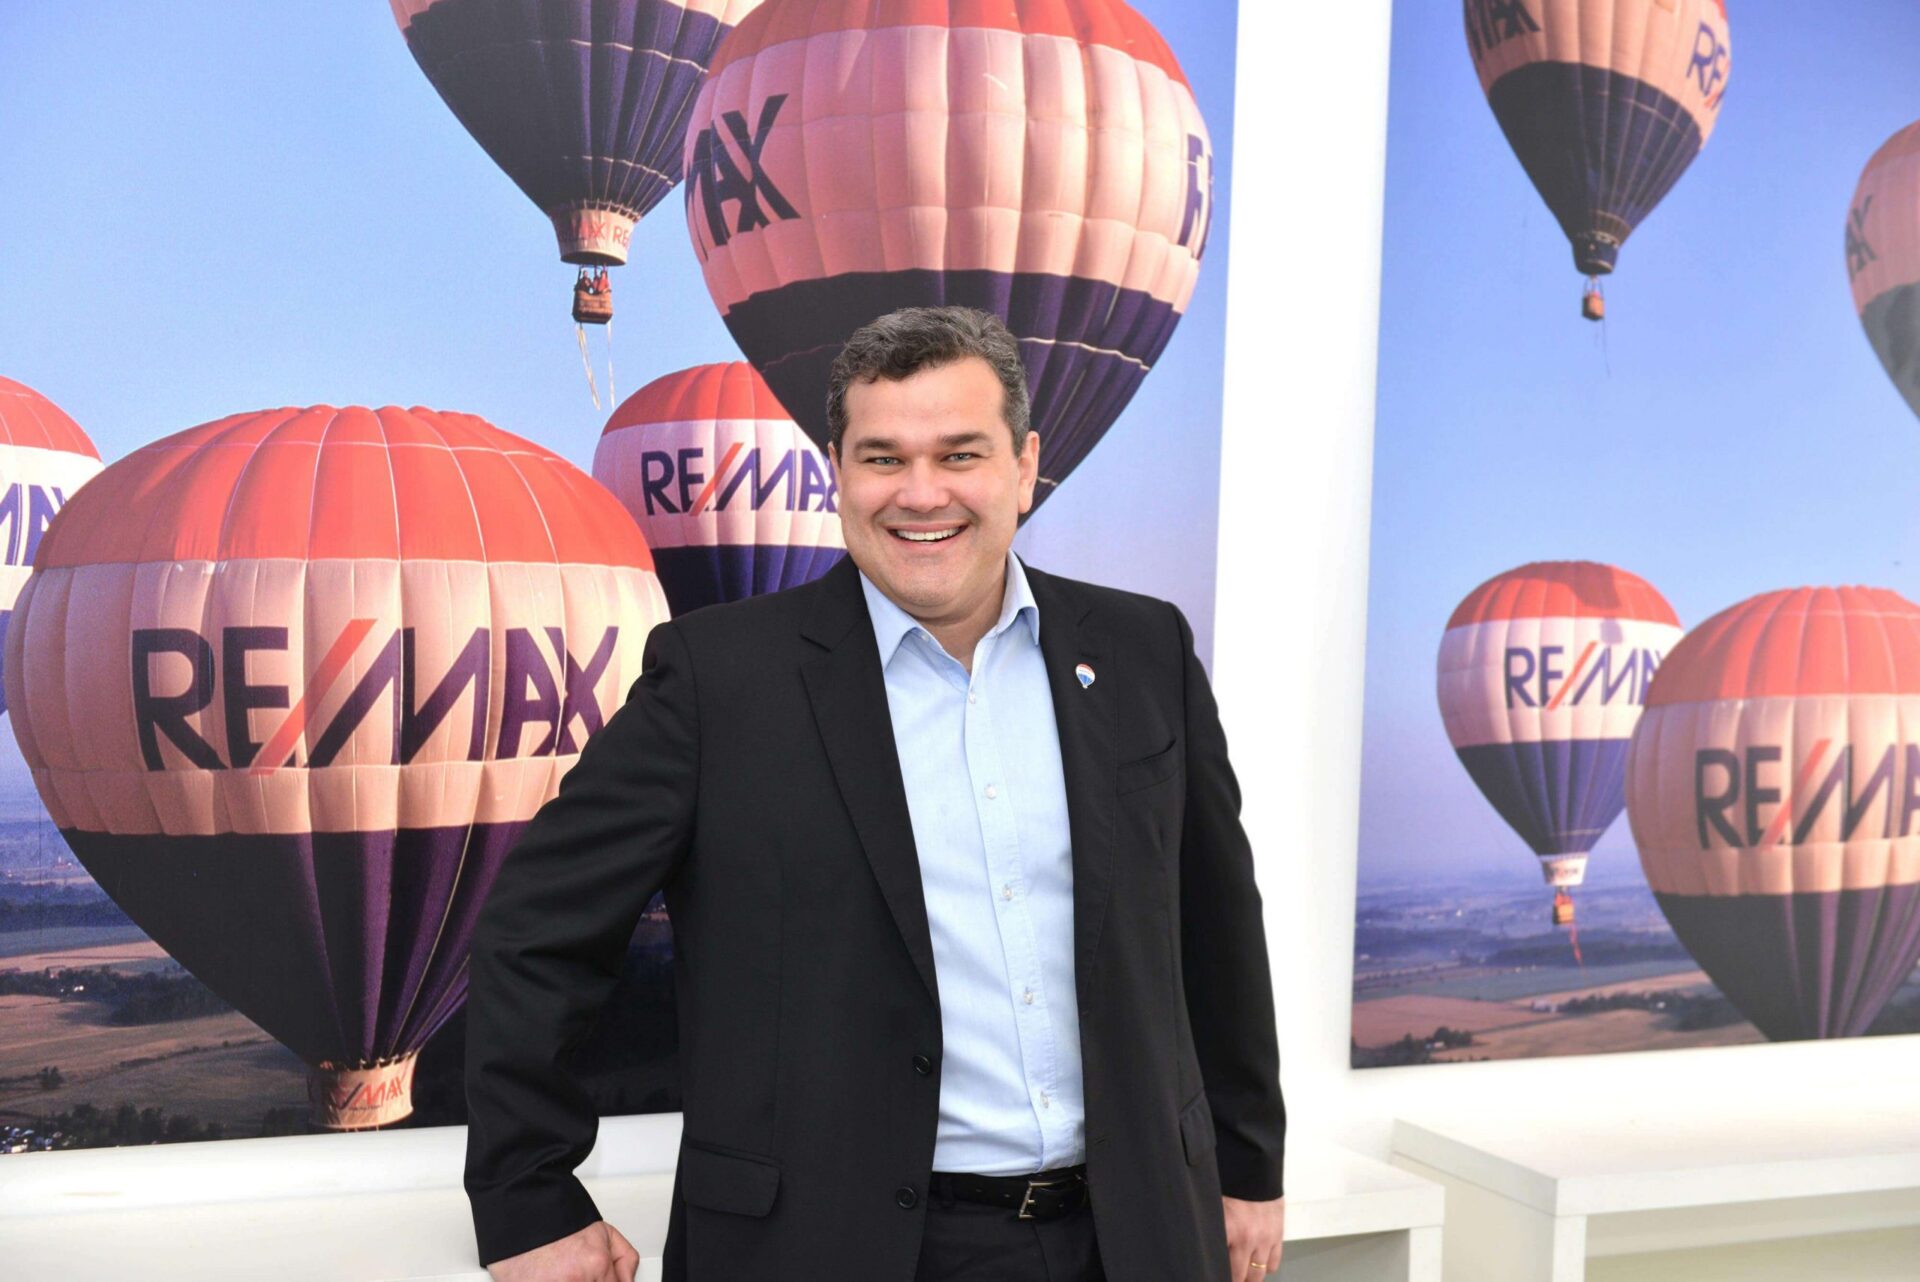 Peixoto Accyoli, CEO da RE/MAX Brasil